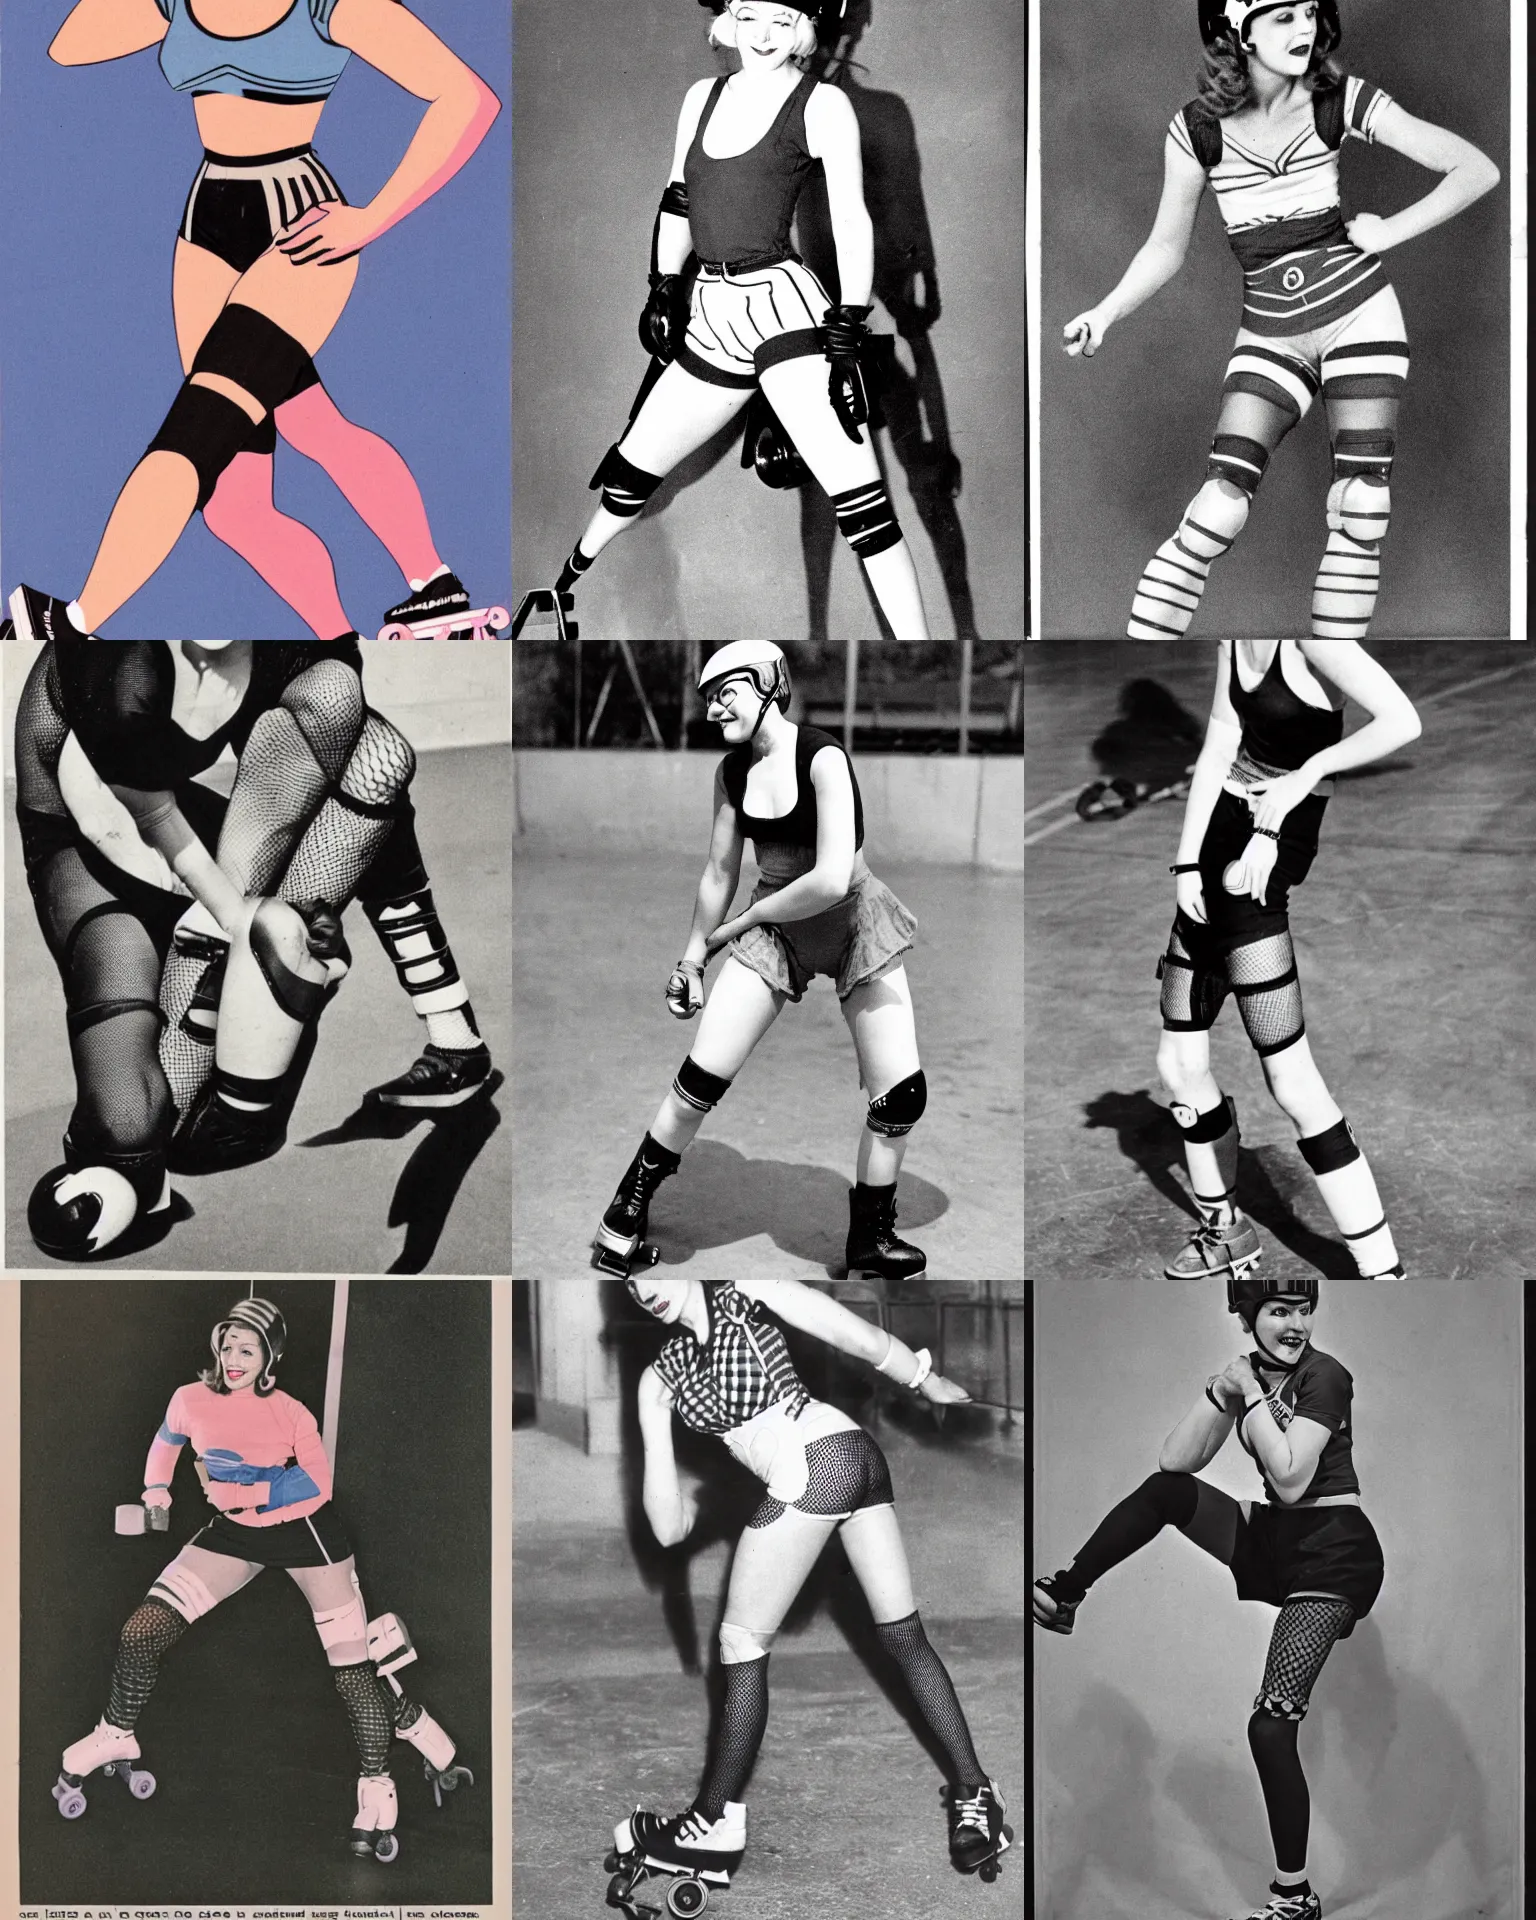 Prompt: roller derby girl doing Cross-Over, wearing skate helmet, knee pads, elbow pads, fishnet tights, showing off biceps, illustration 1950s